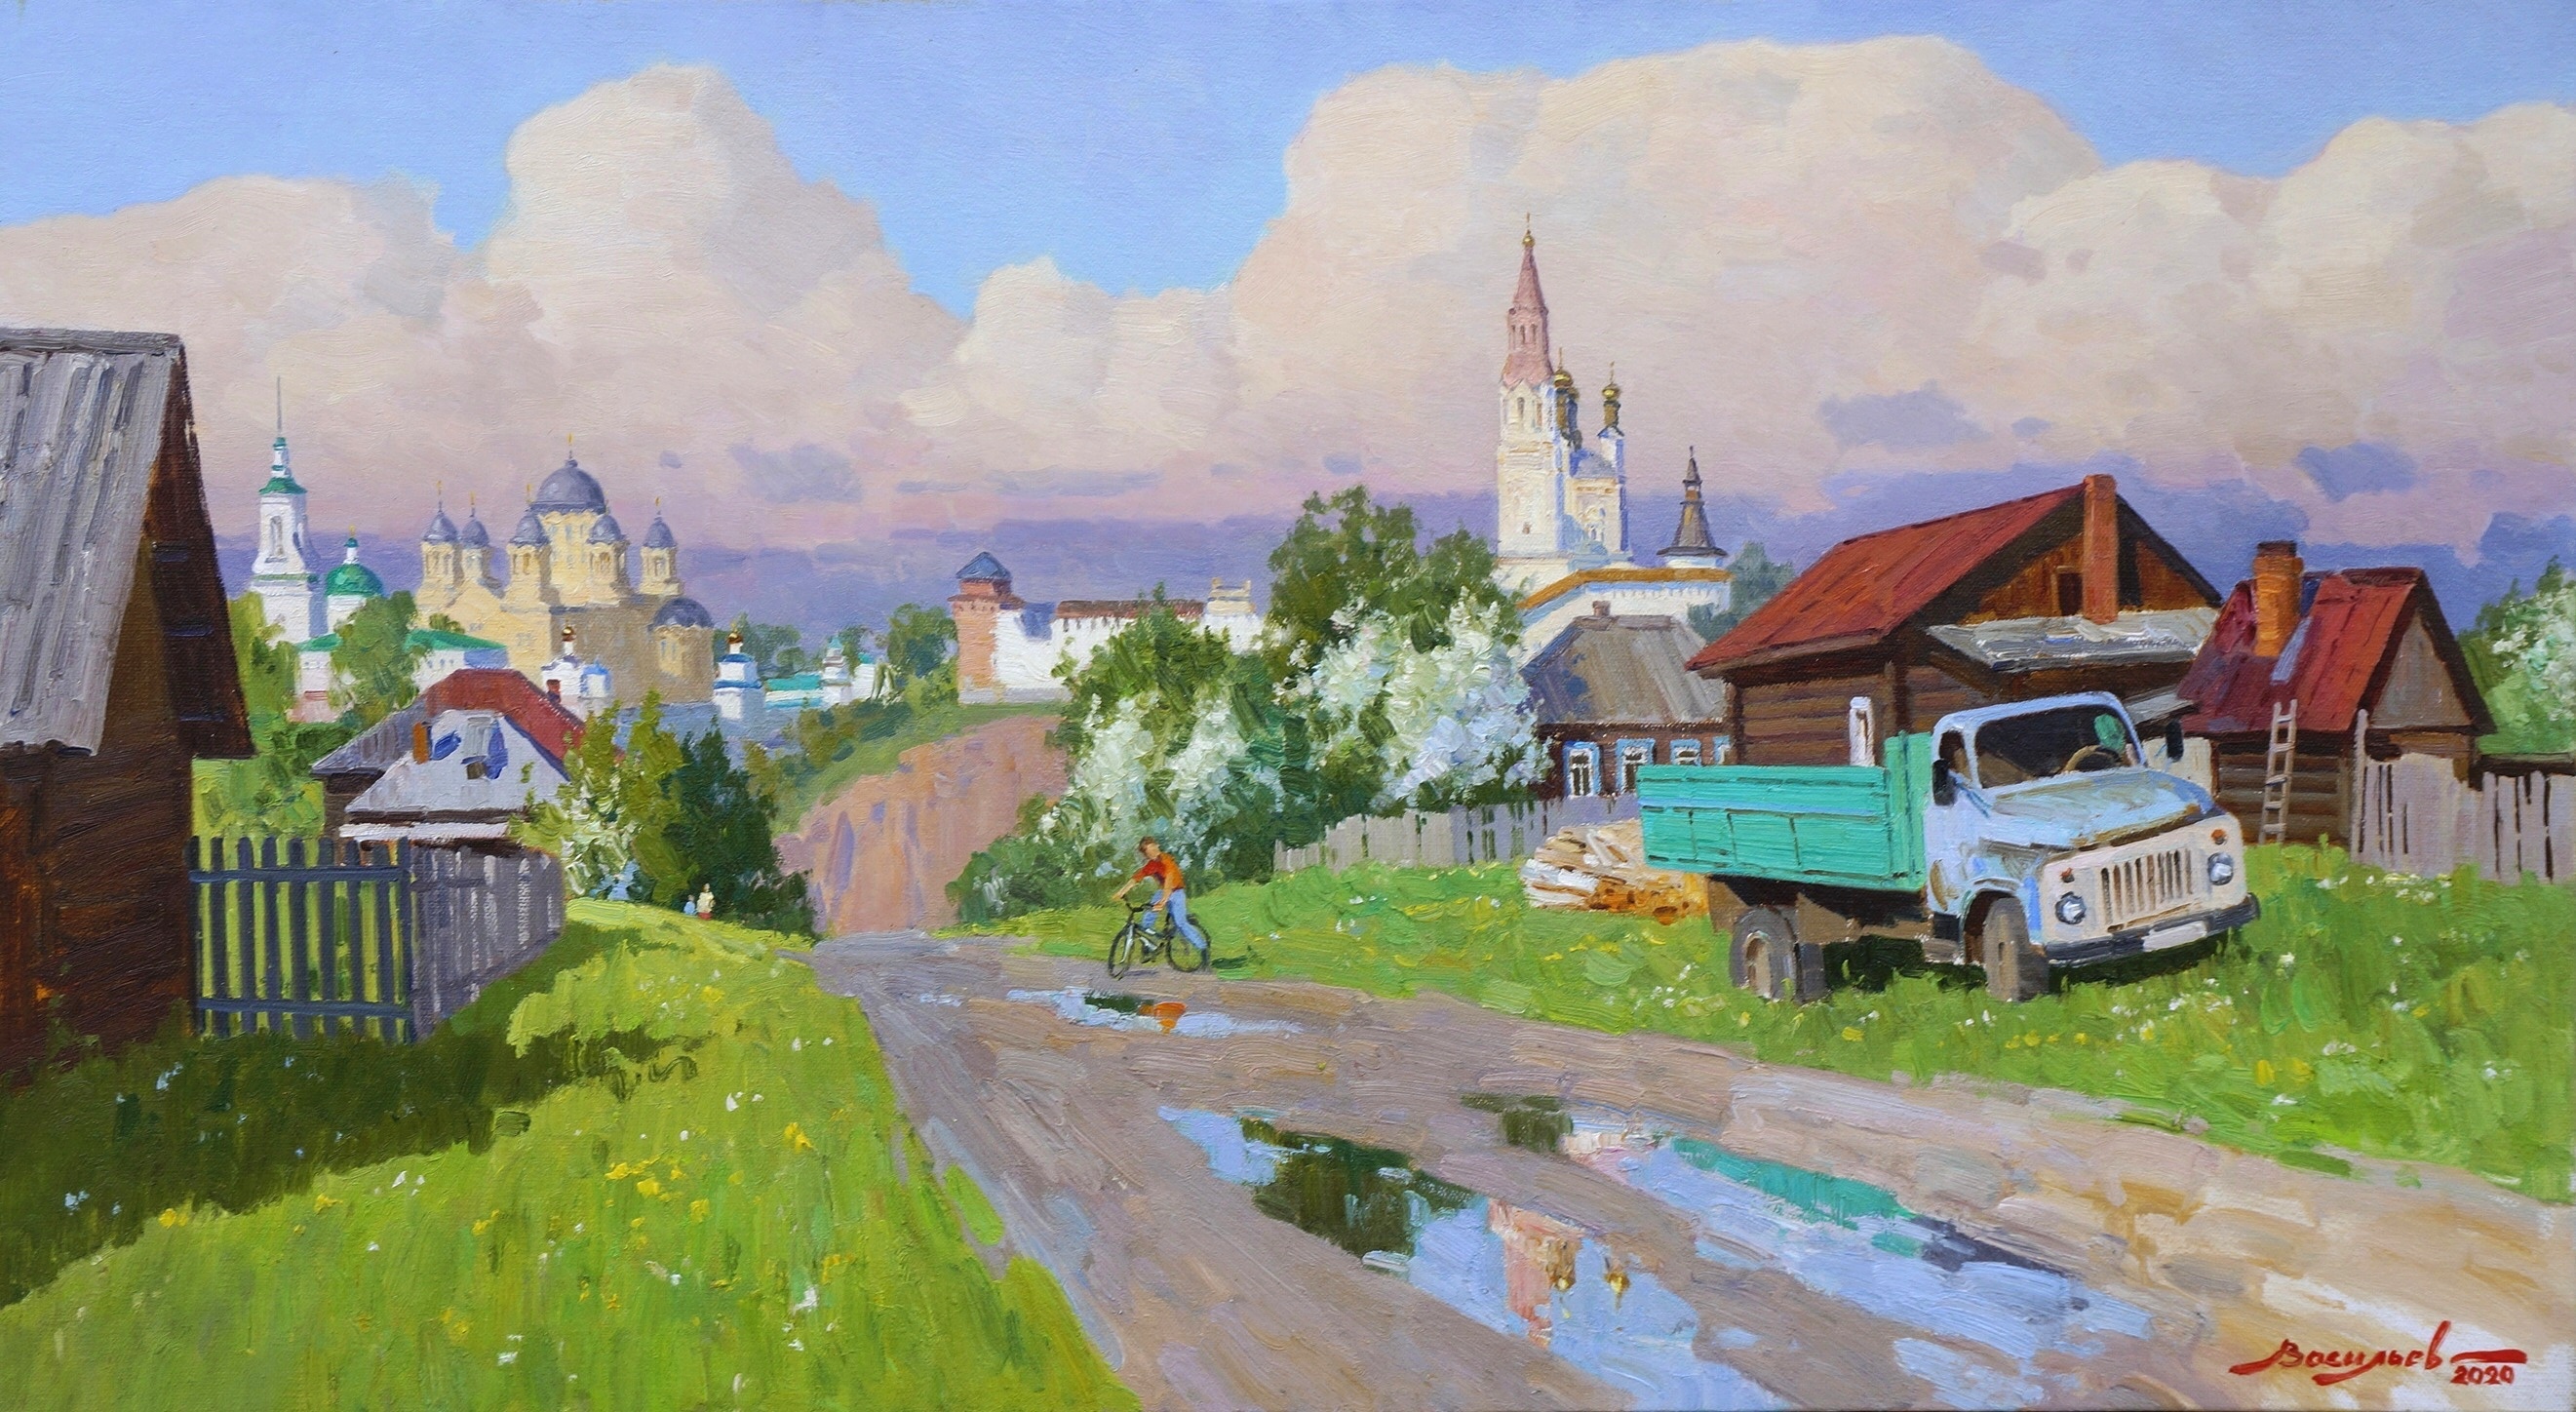  - 1, Dmitry Vasiliev, Buy the painting Oil